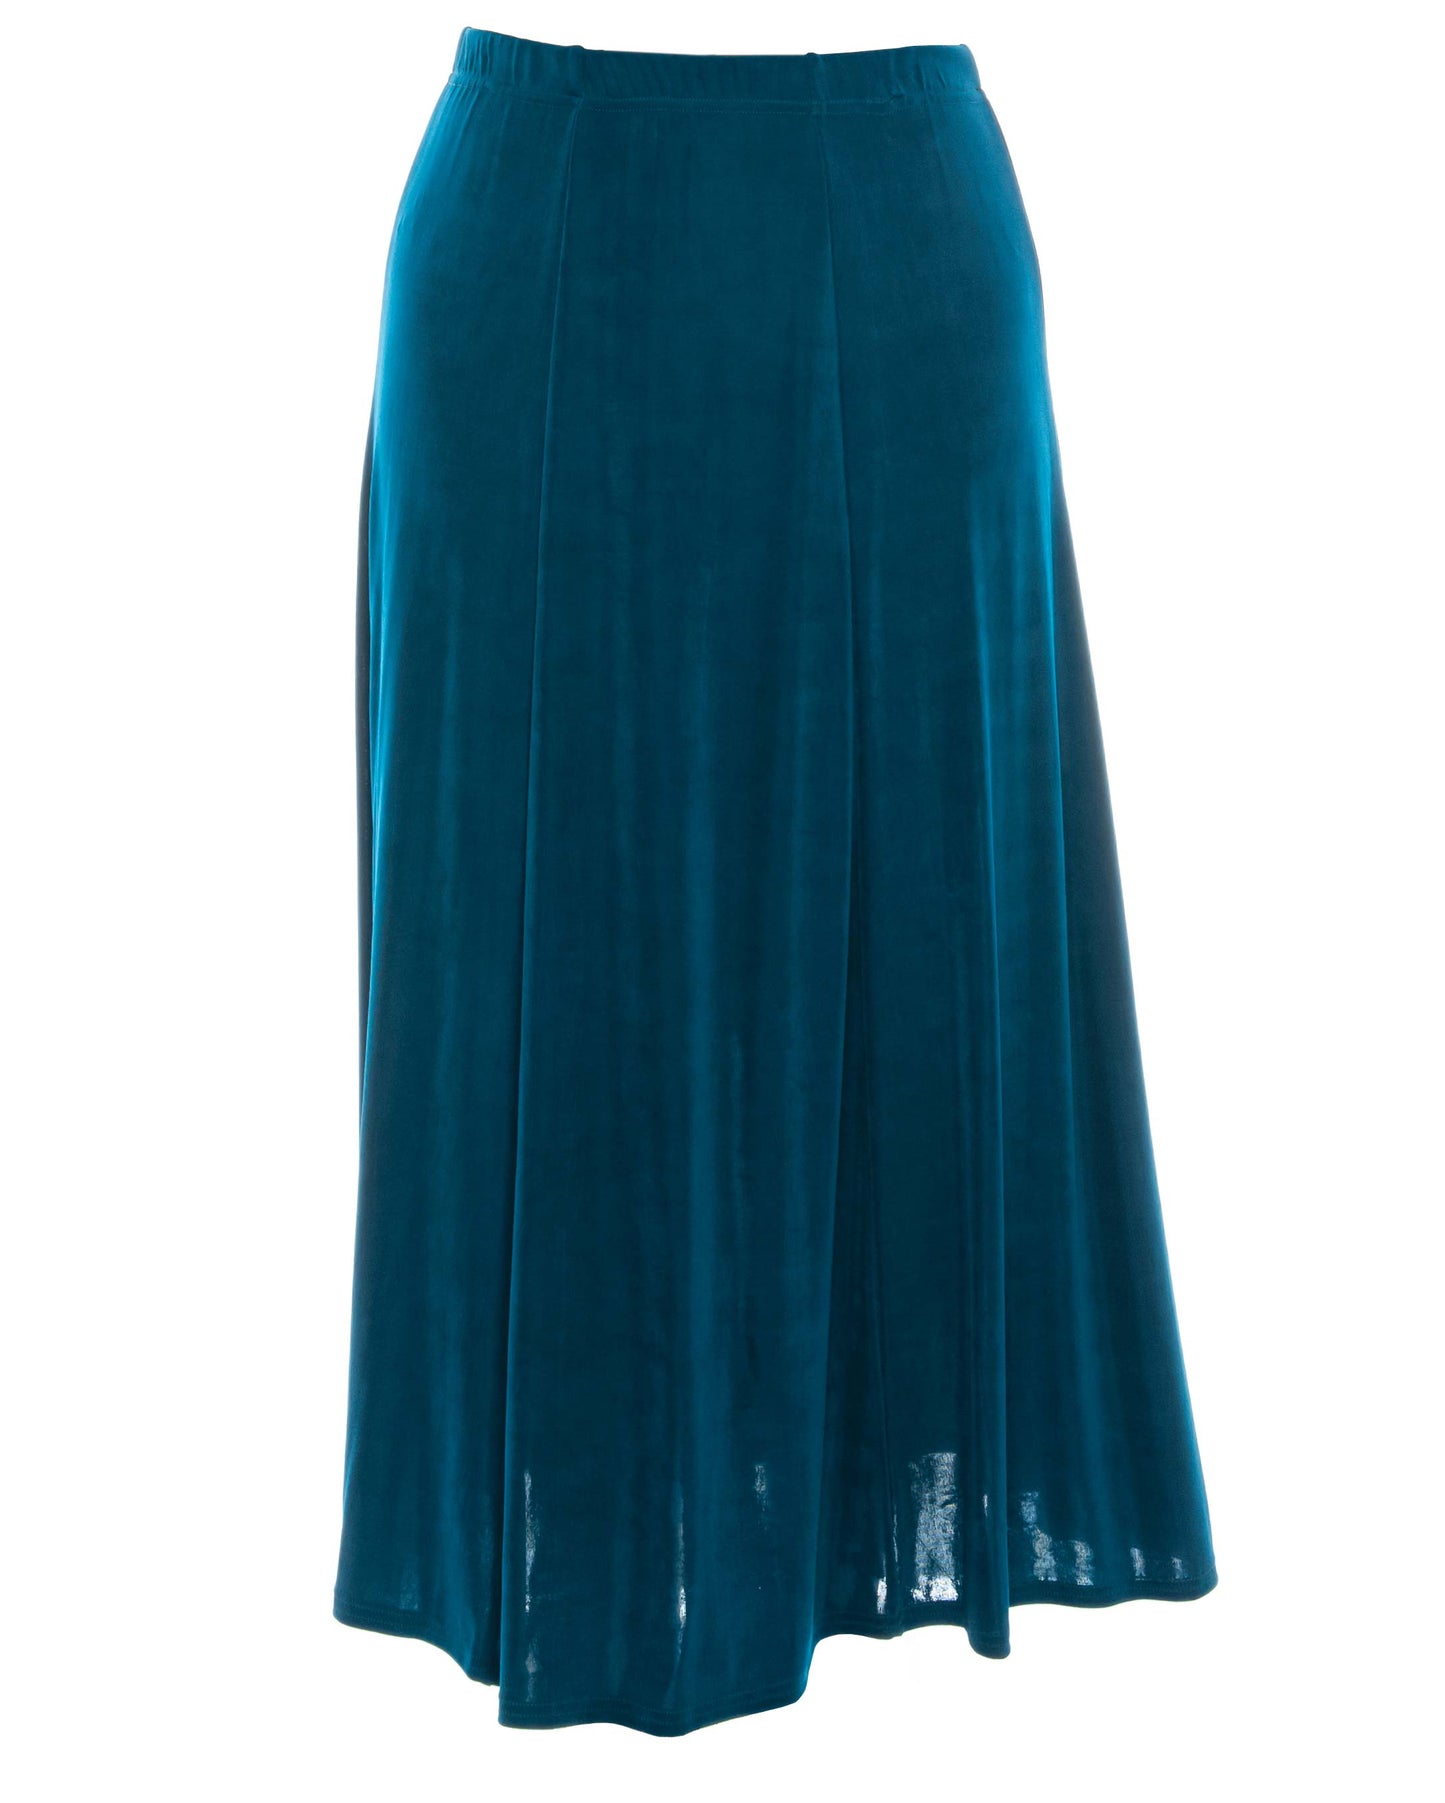 Non Iron Flared Skirt with Plus Sizes, 602AY-X - Jostar Online